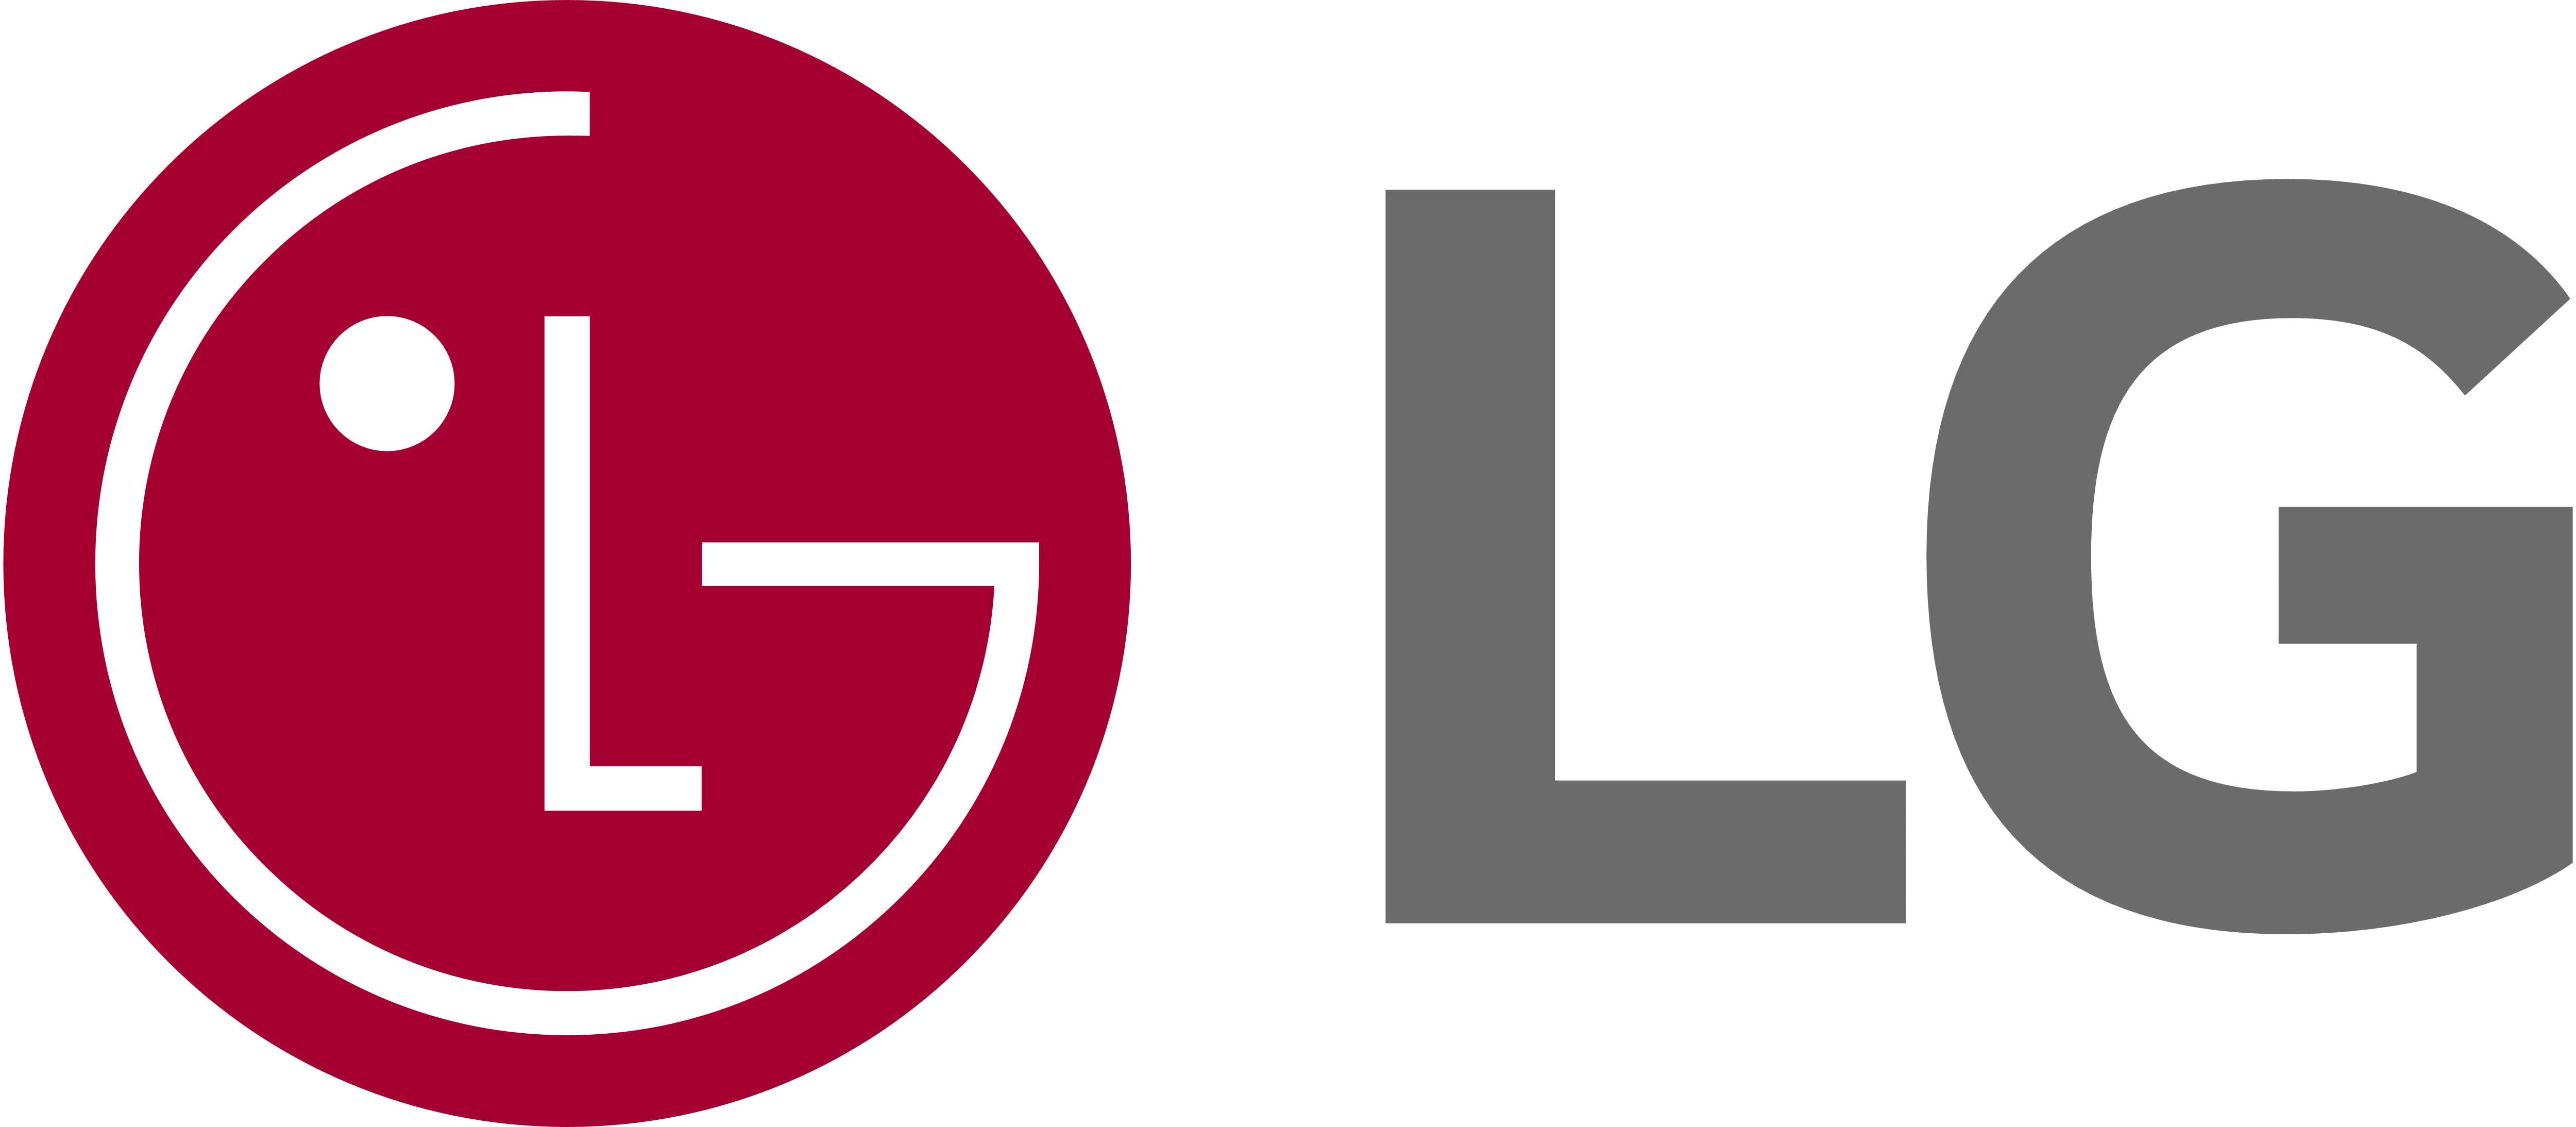 LG Home Dryer Repair, GE Dryer Service